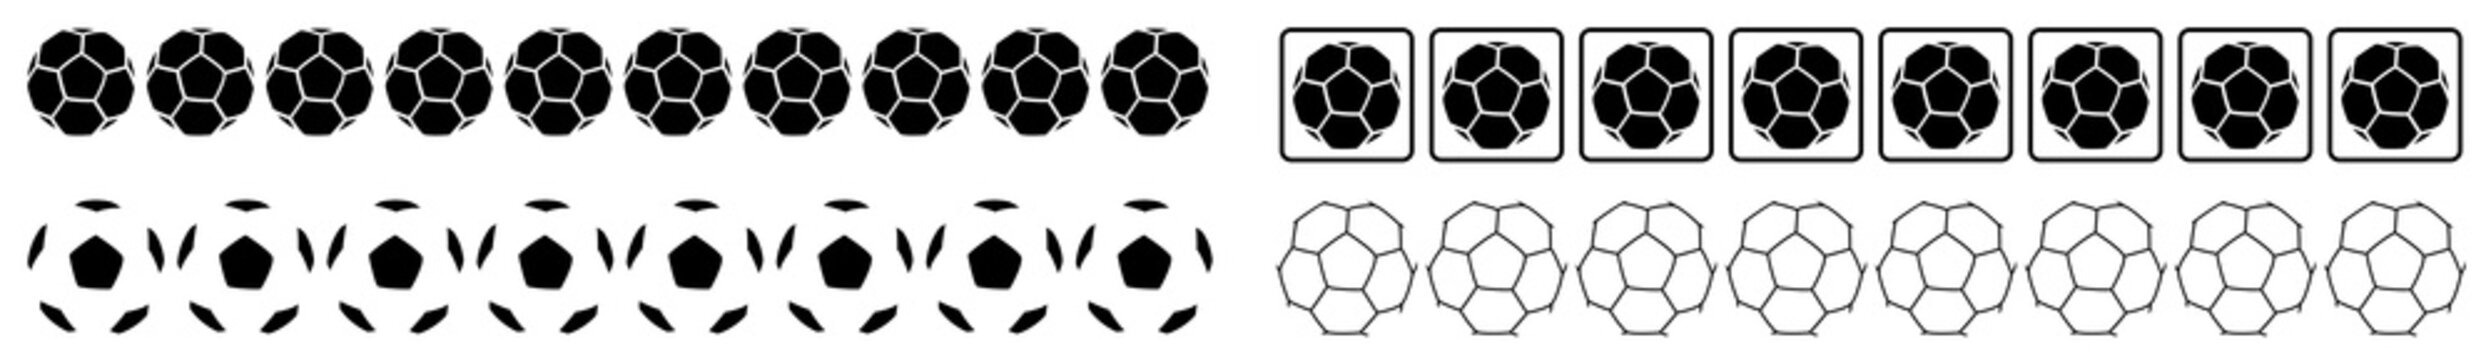 Fußball Trennlinie Bordüre Grenze Rahmen Abgrenzung - football soccer borders divider design decoration elements #vector